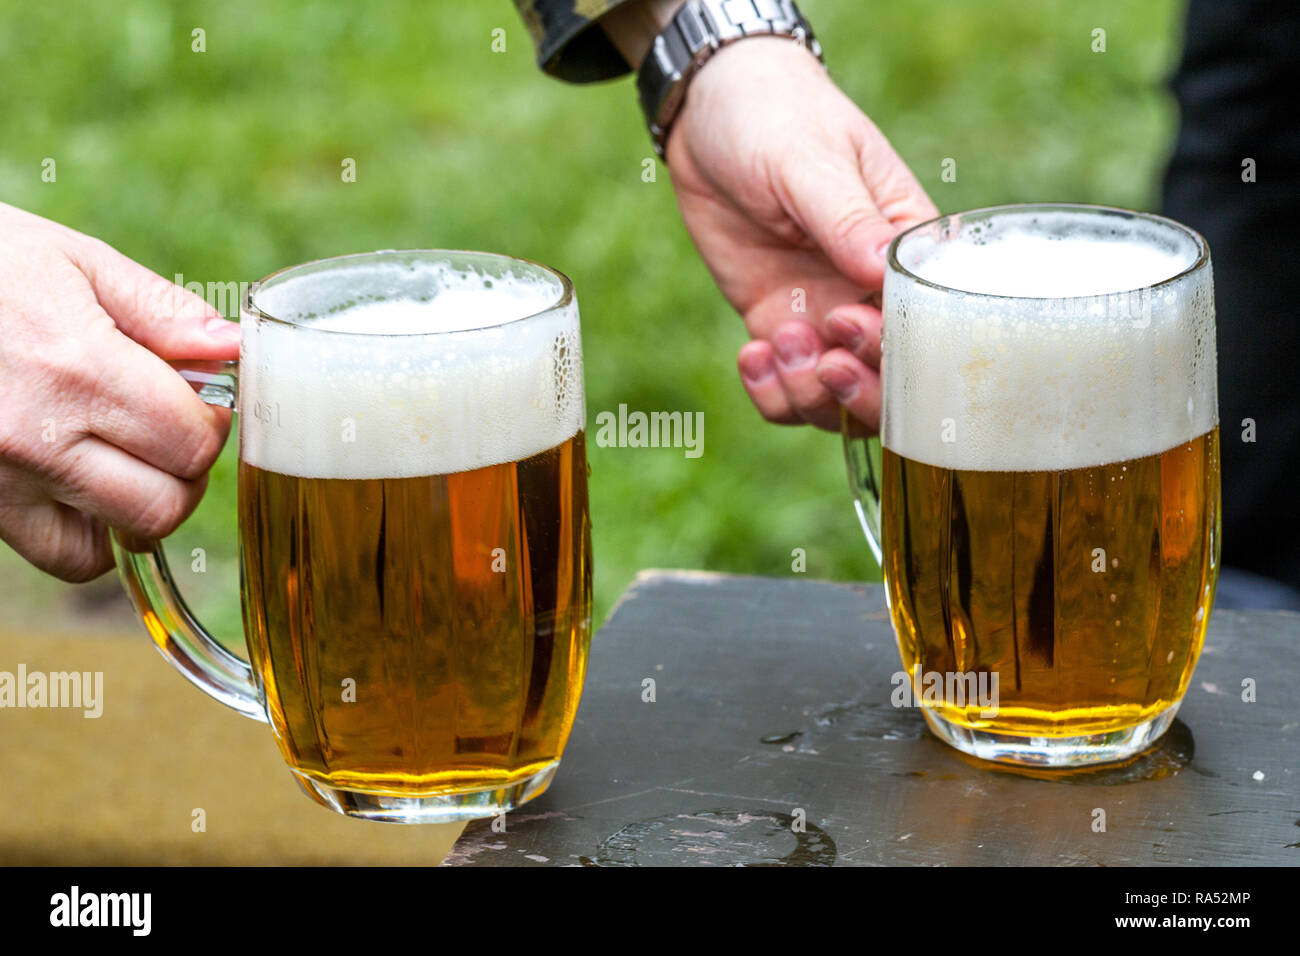 Due bicchieri di birra alla spina, birra ceca, birra Pilsner Urquell, Repubblica Ceca Foto Stock